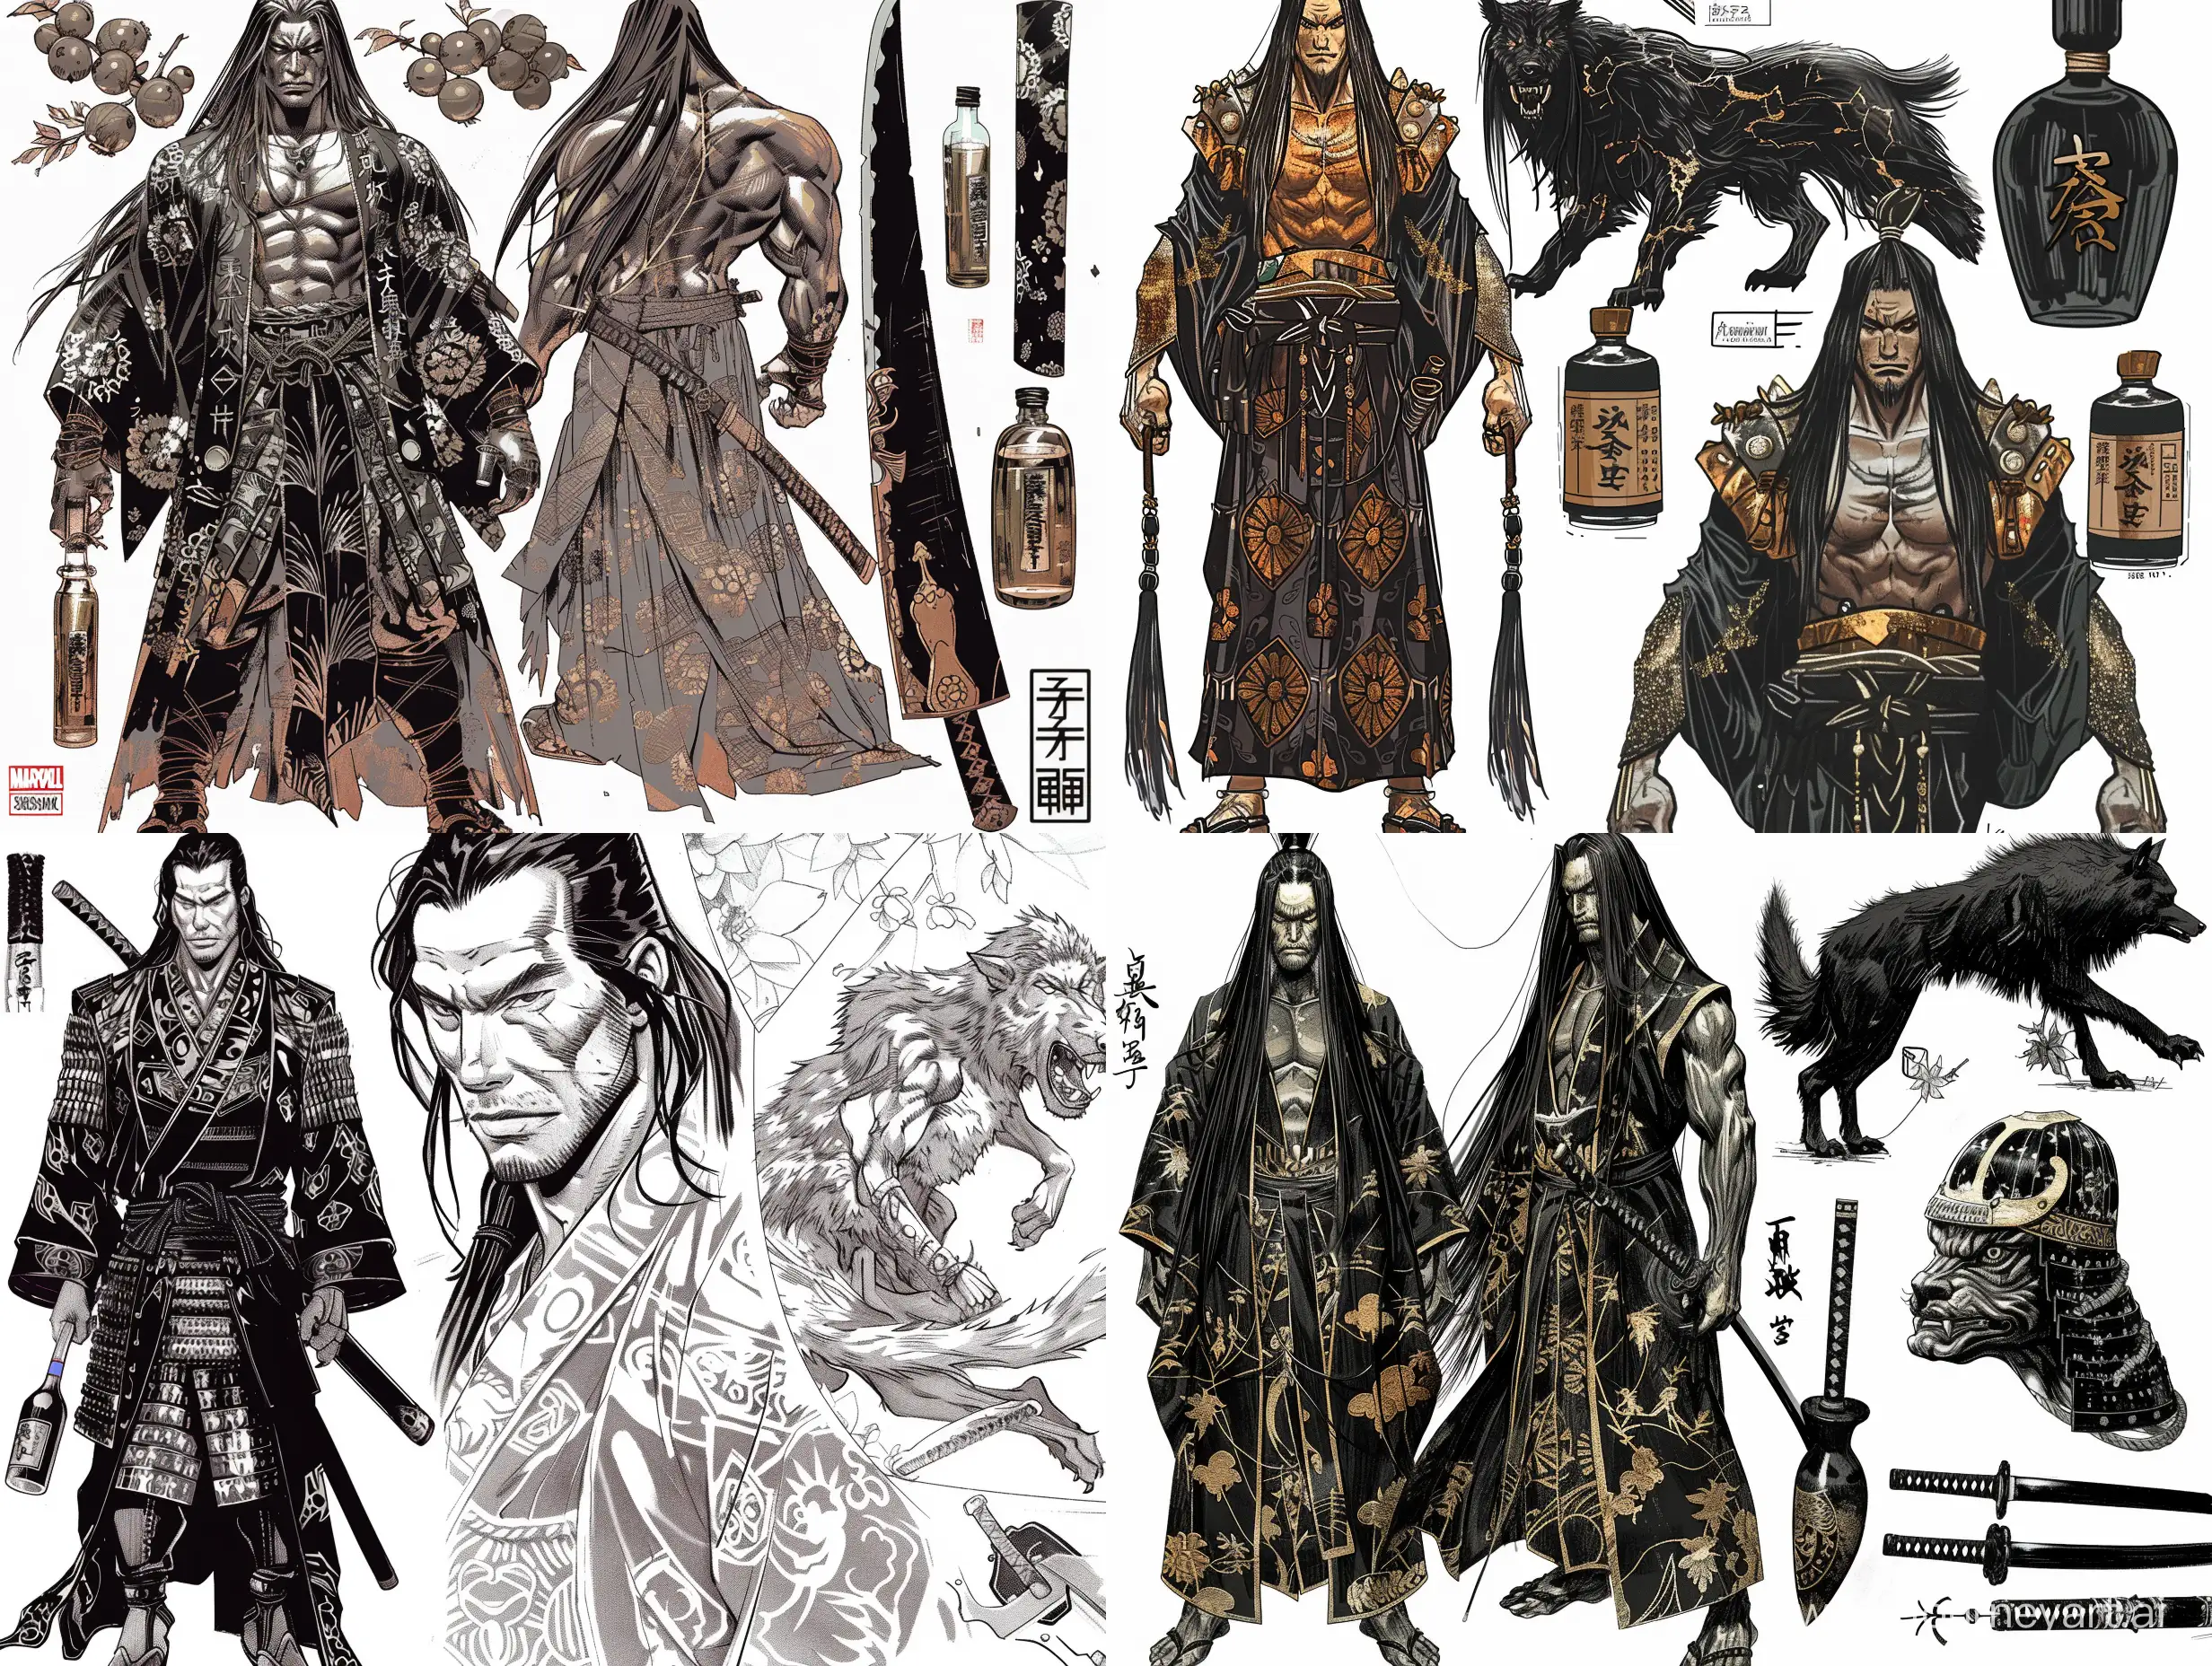 Muscular-Asian-Samurai-Warrior-in-Intricate-Robes-and-Samurai-Armor